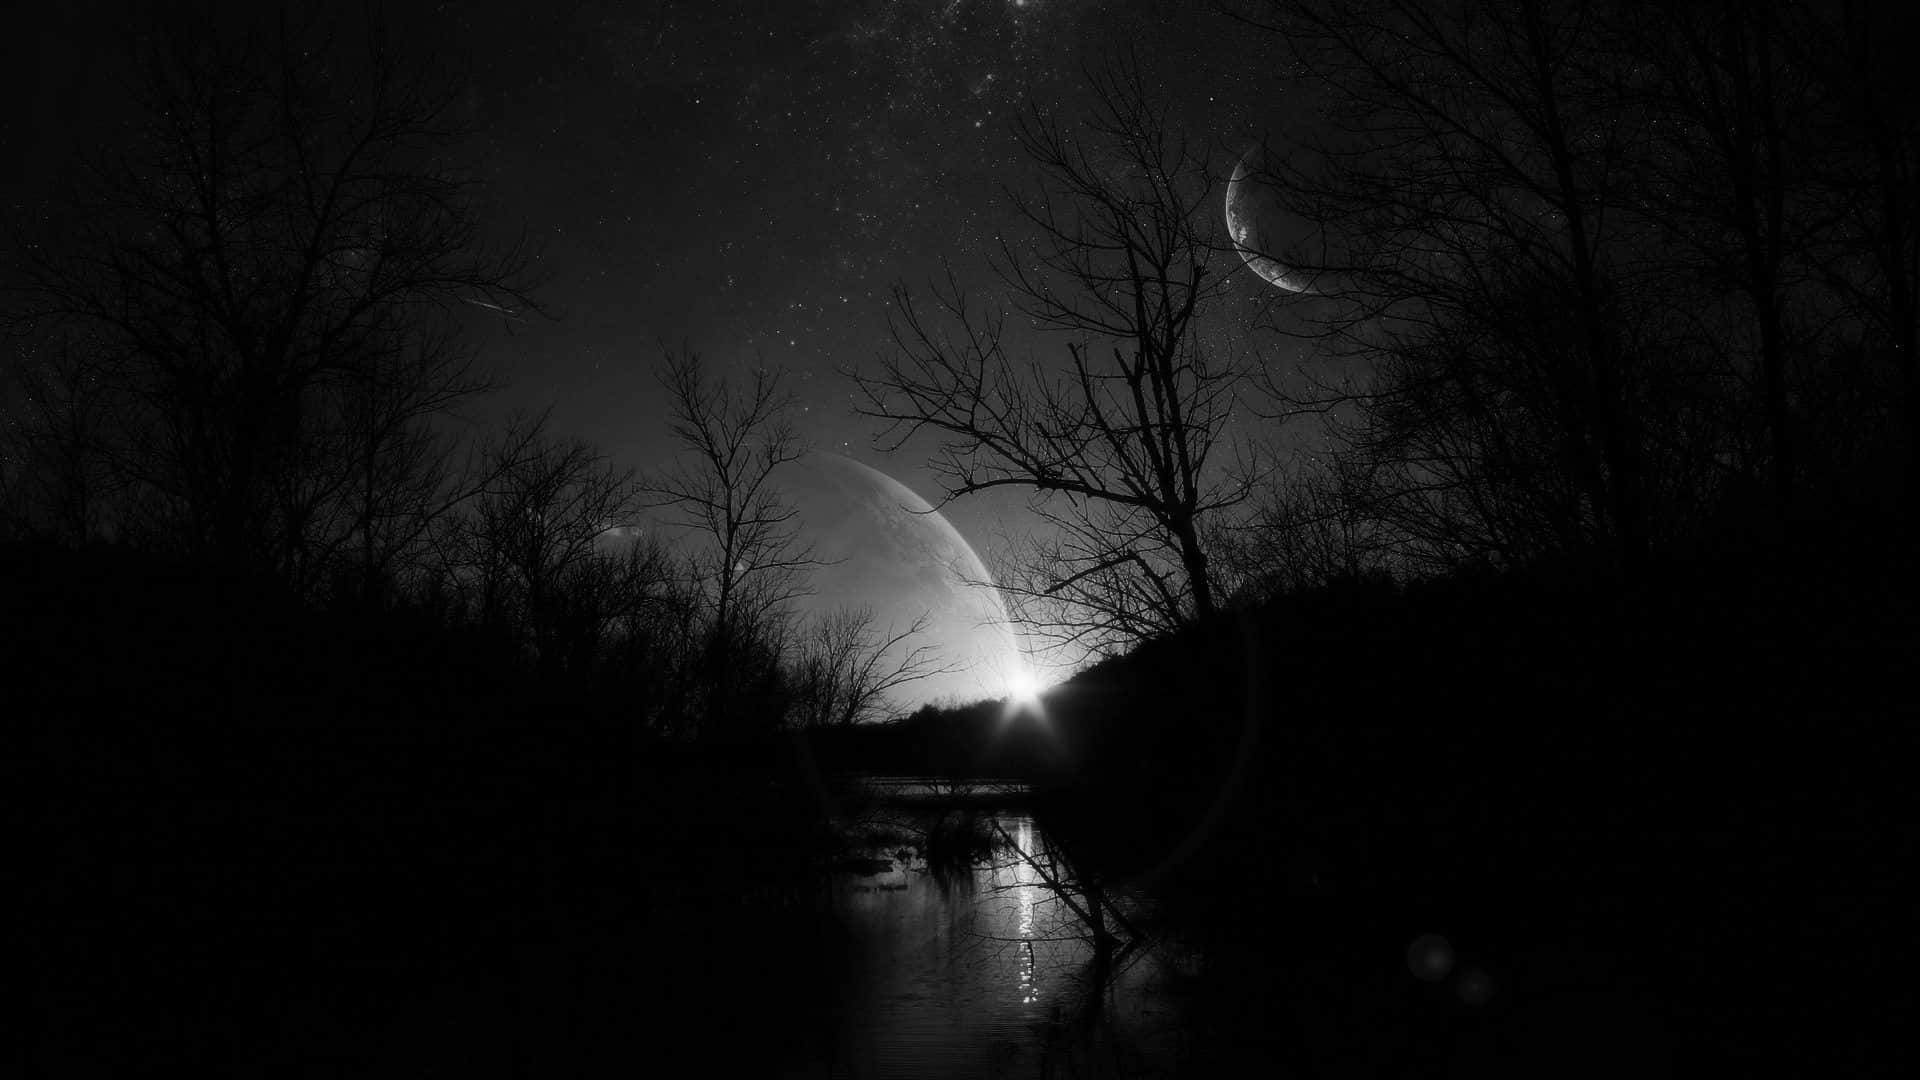 Dark Depressing River In The Night